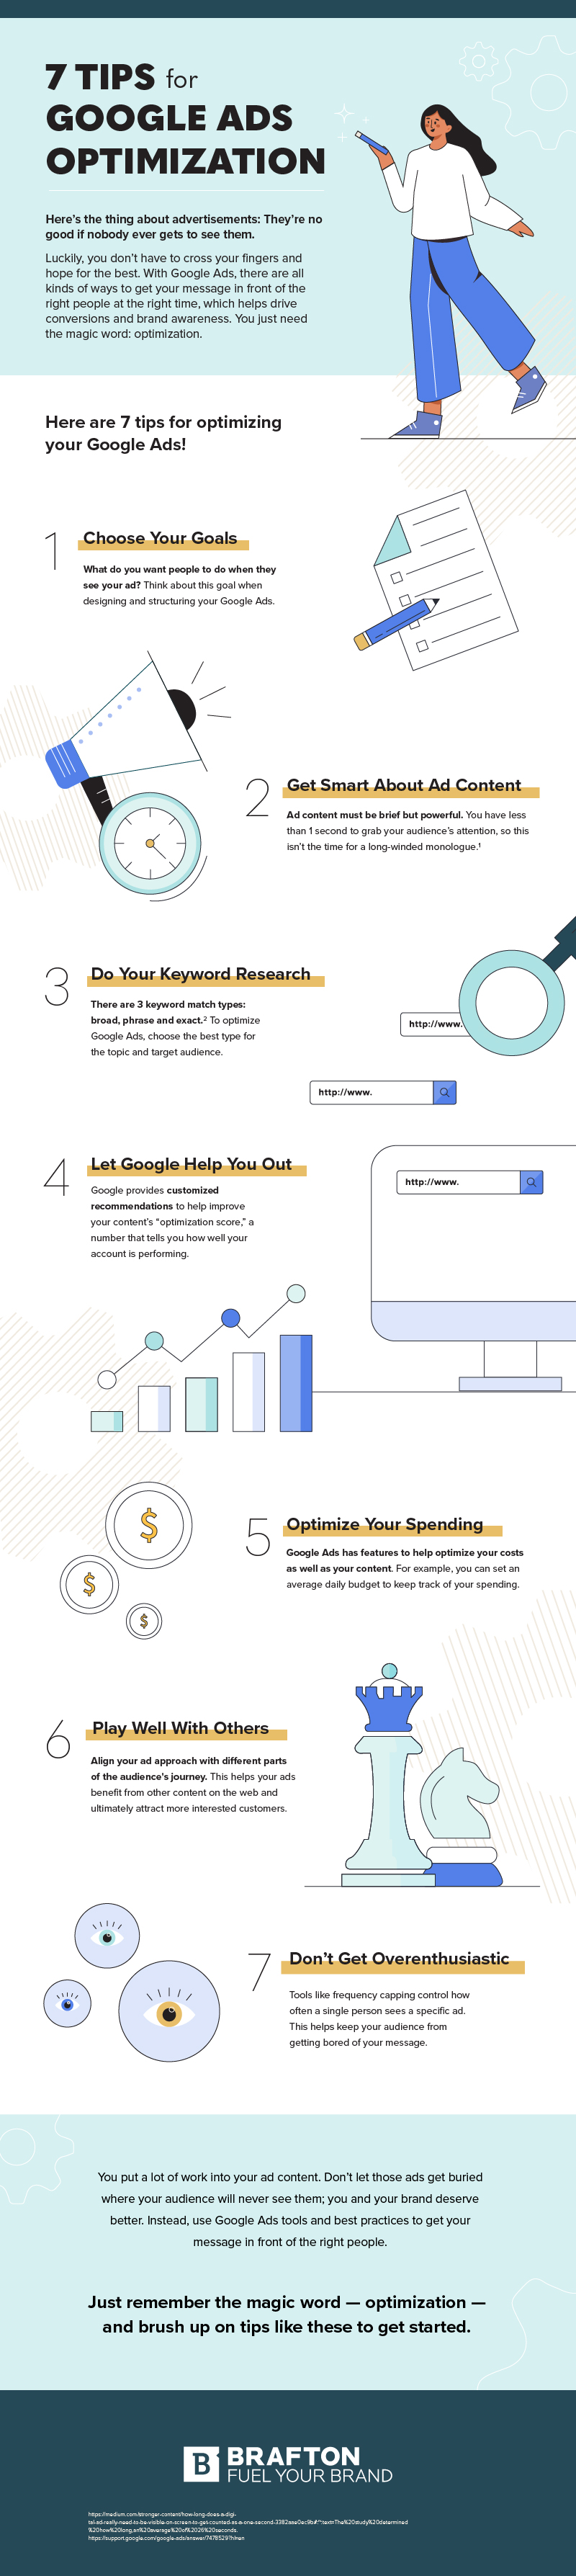 7 Tips谷歌广告优化信息图